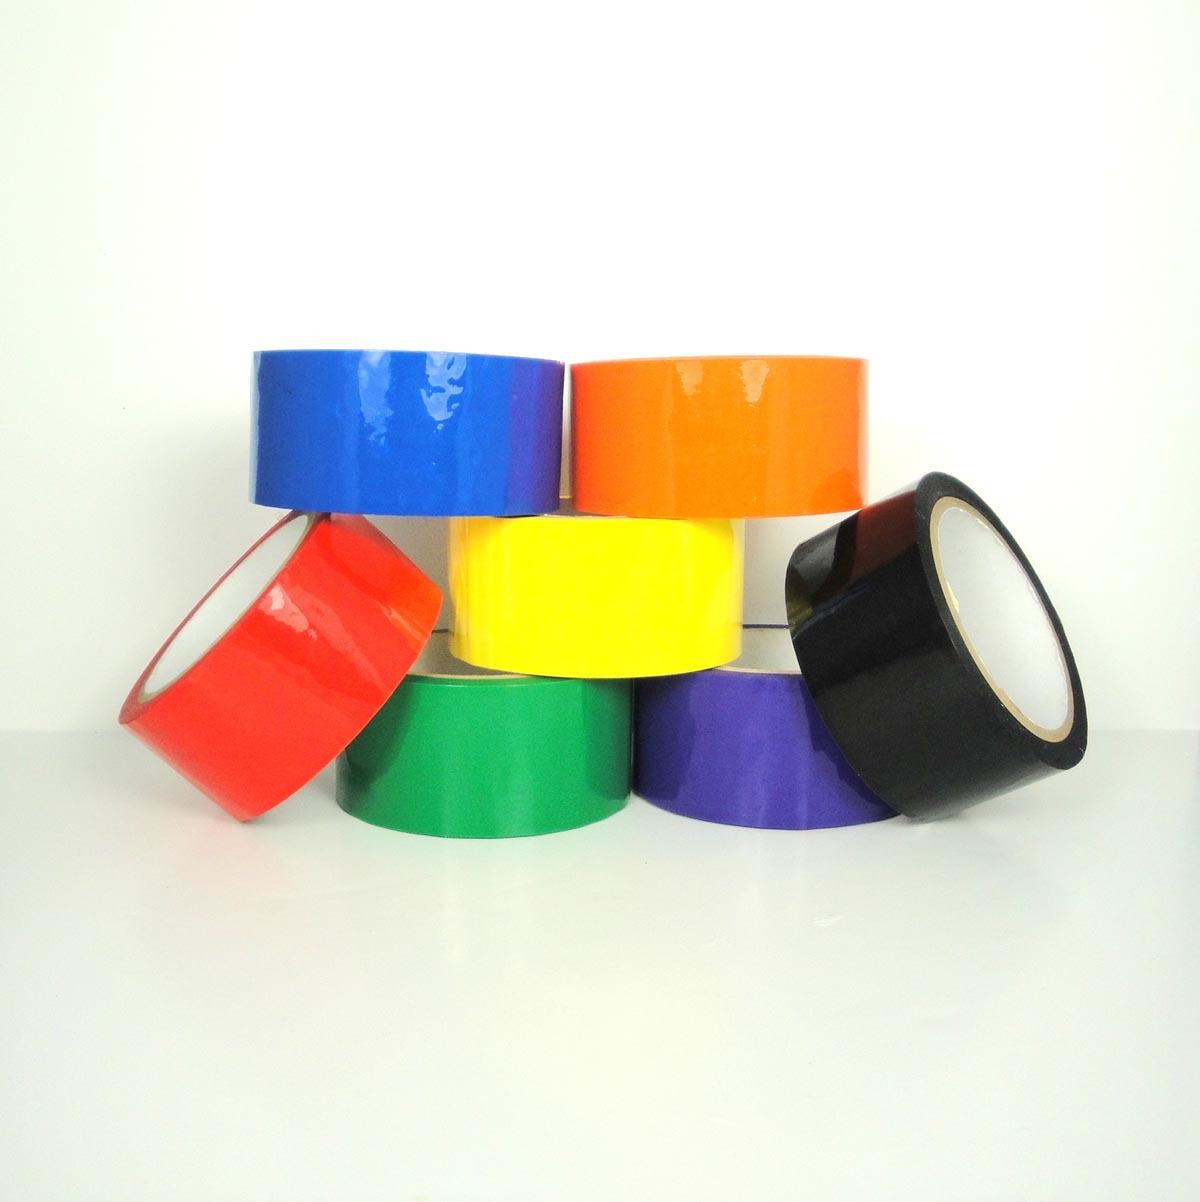 Glass Cloth Thermal Spray Masking Tape (80907) - Tape Depot